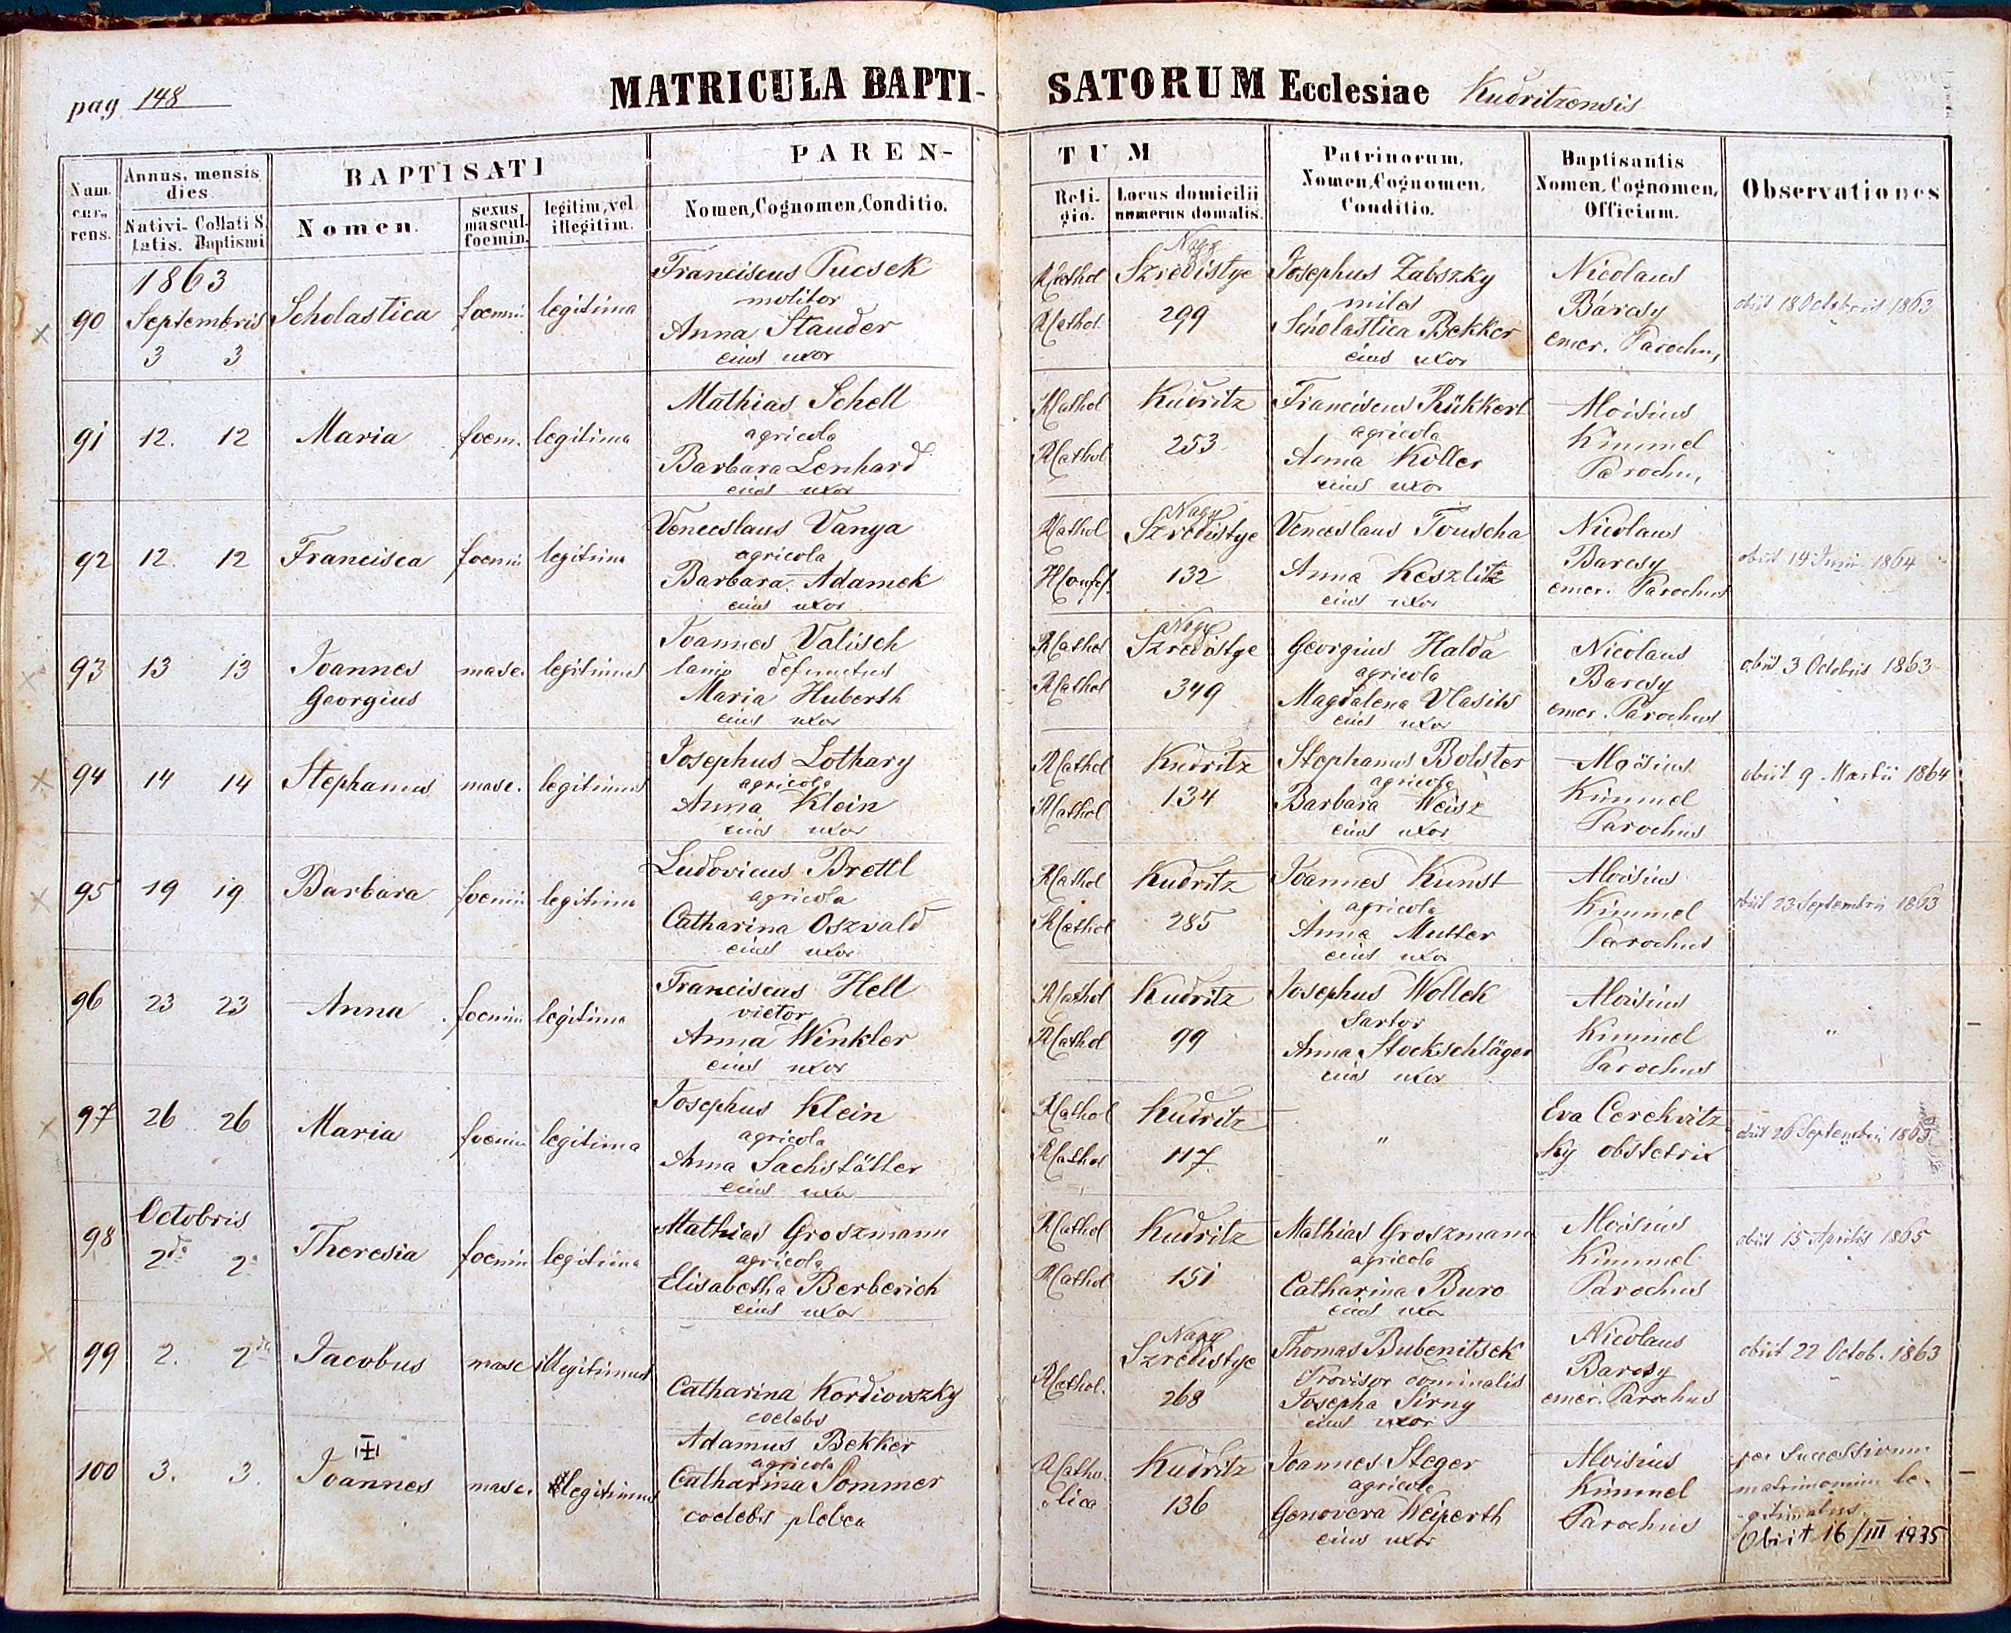 images/church_records/BIRTHS/1852-1870B/148